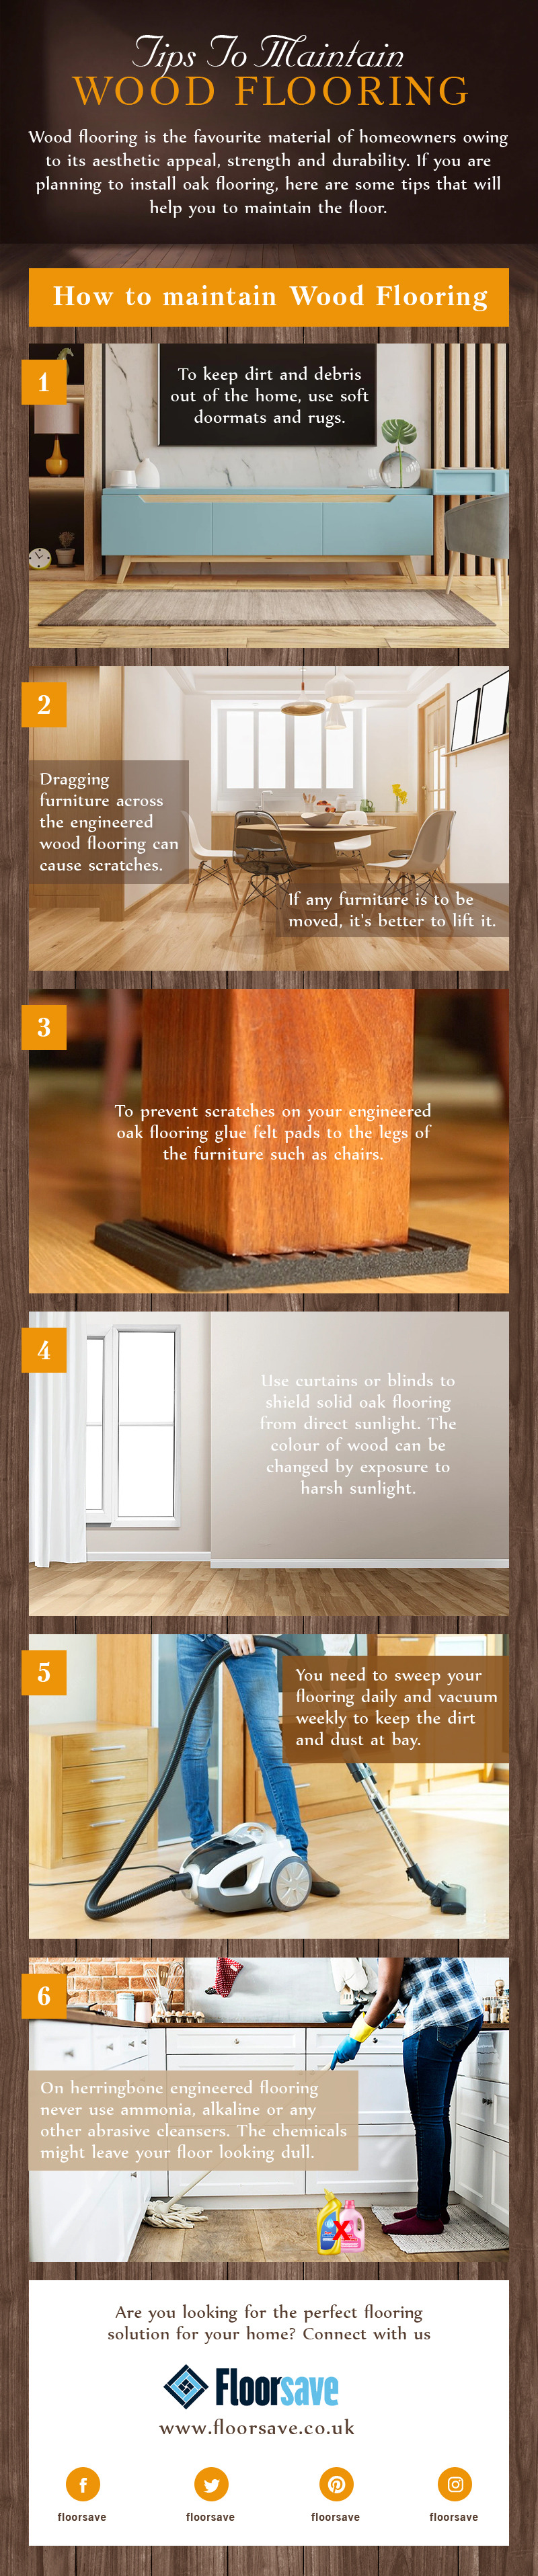 Amazing Tips to maintain Wood Flooring